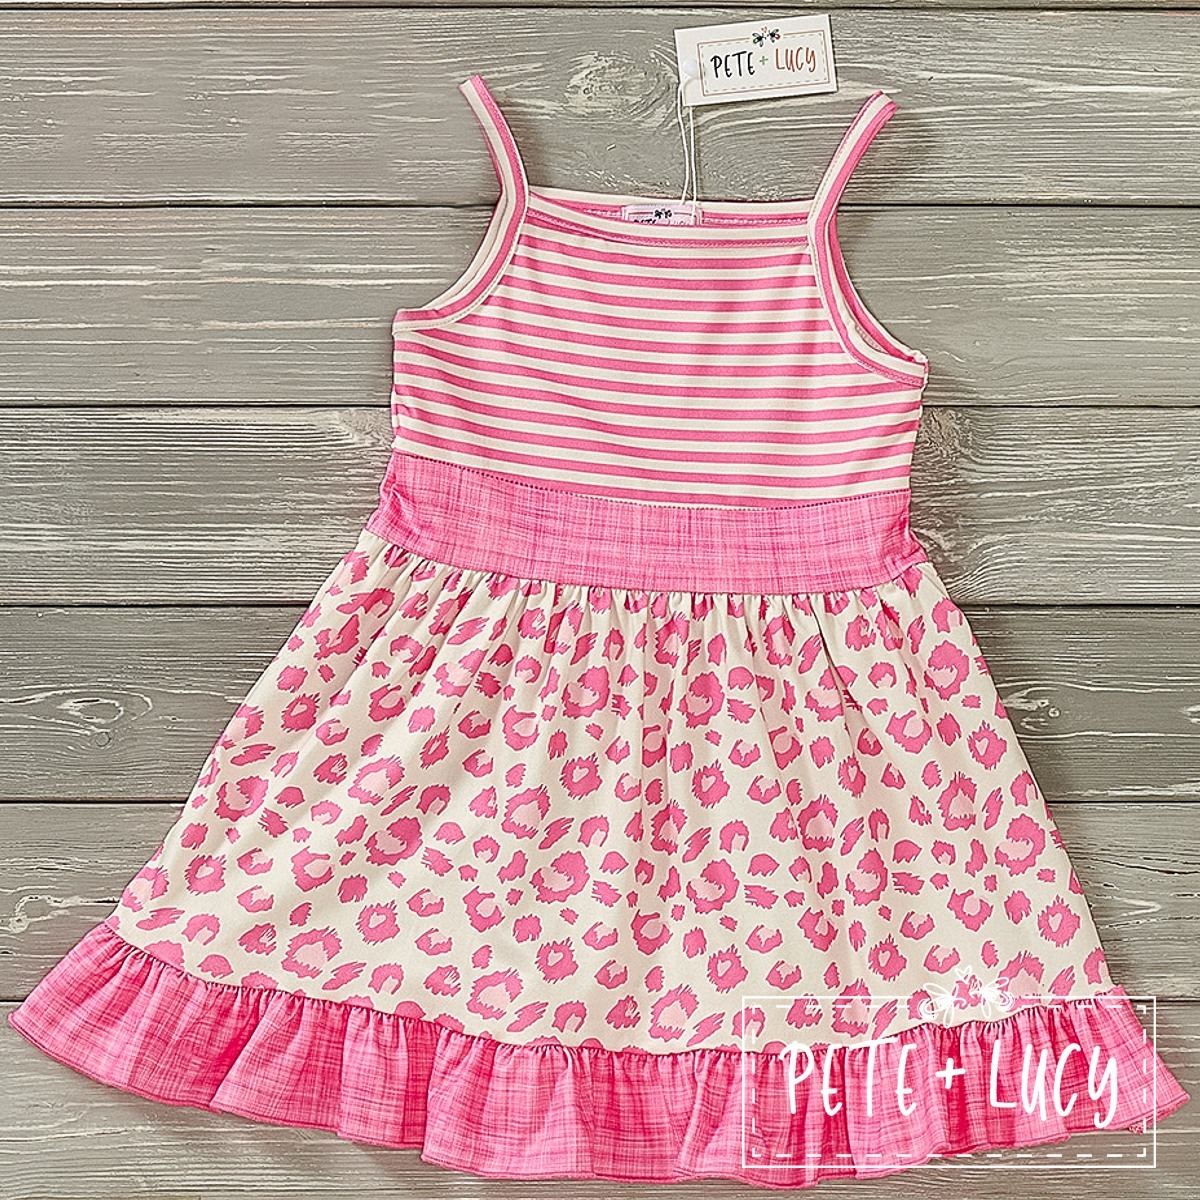 Pete + Lucy 'Pink Safari' dress | Designs by Arella